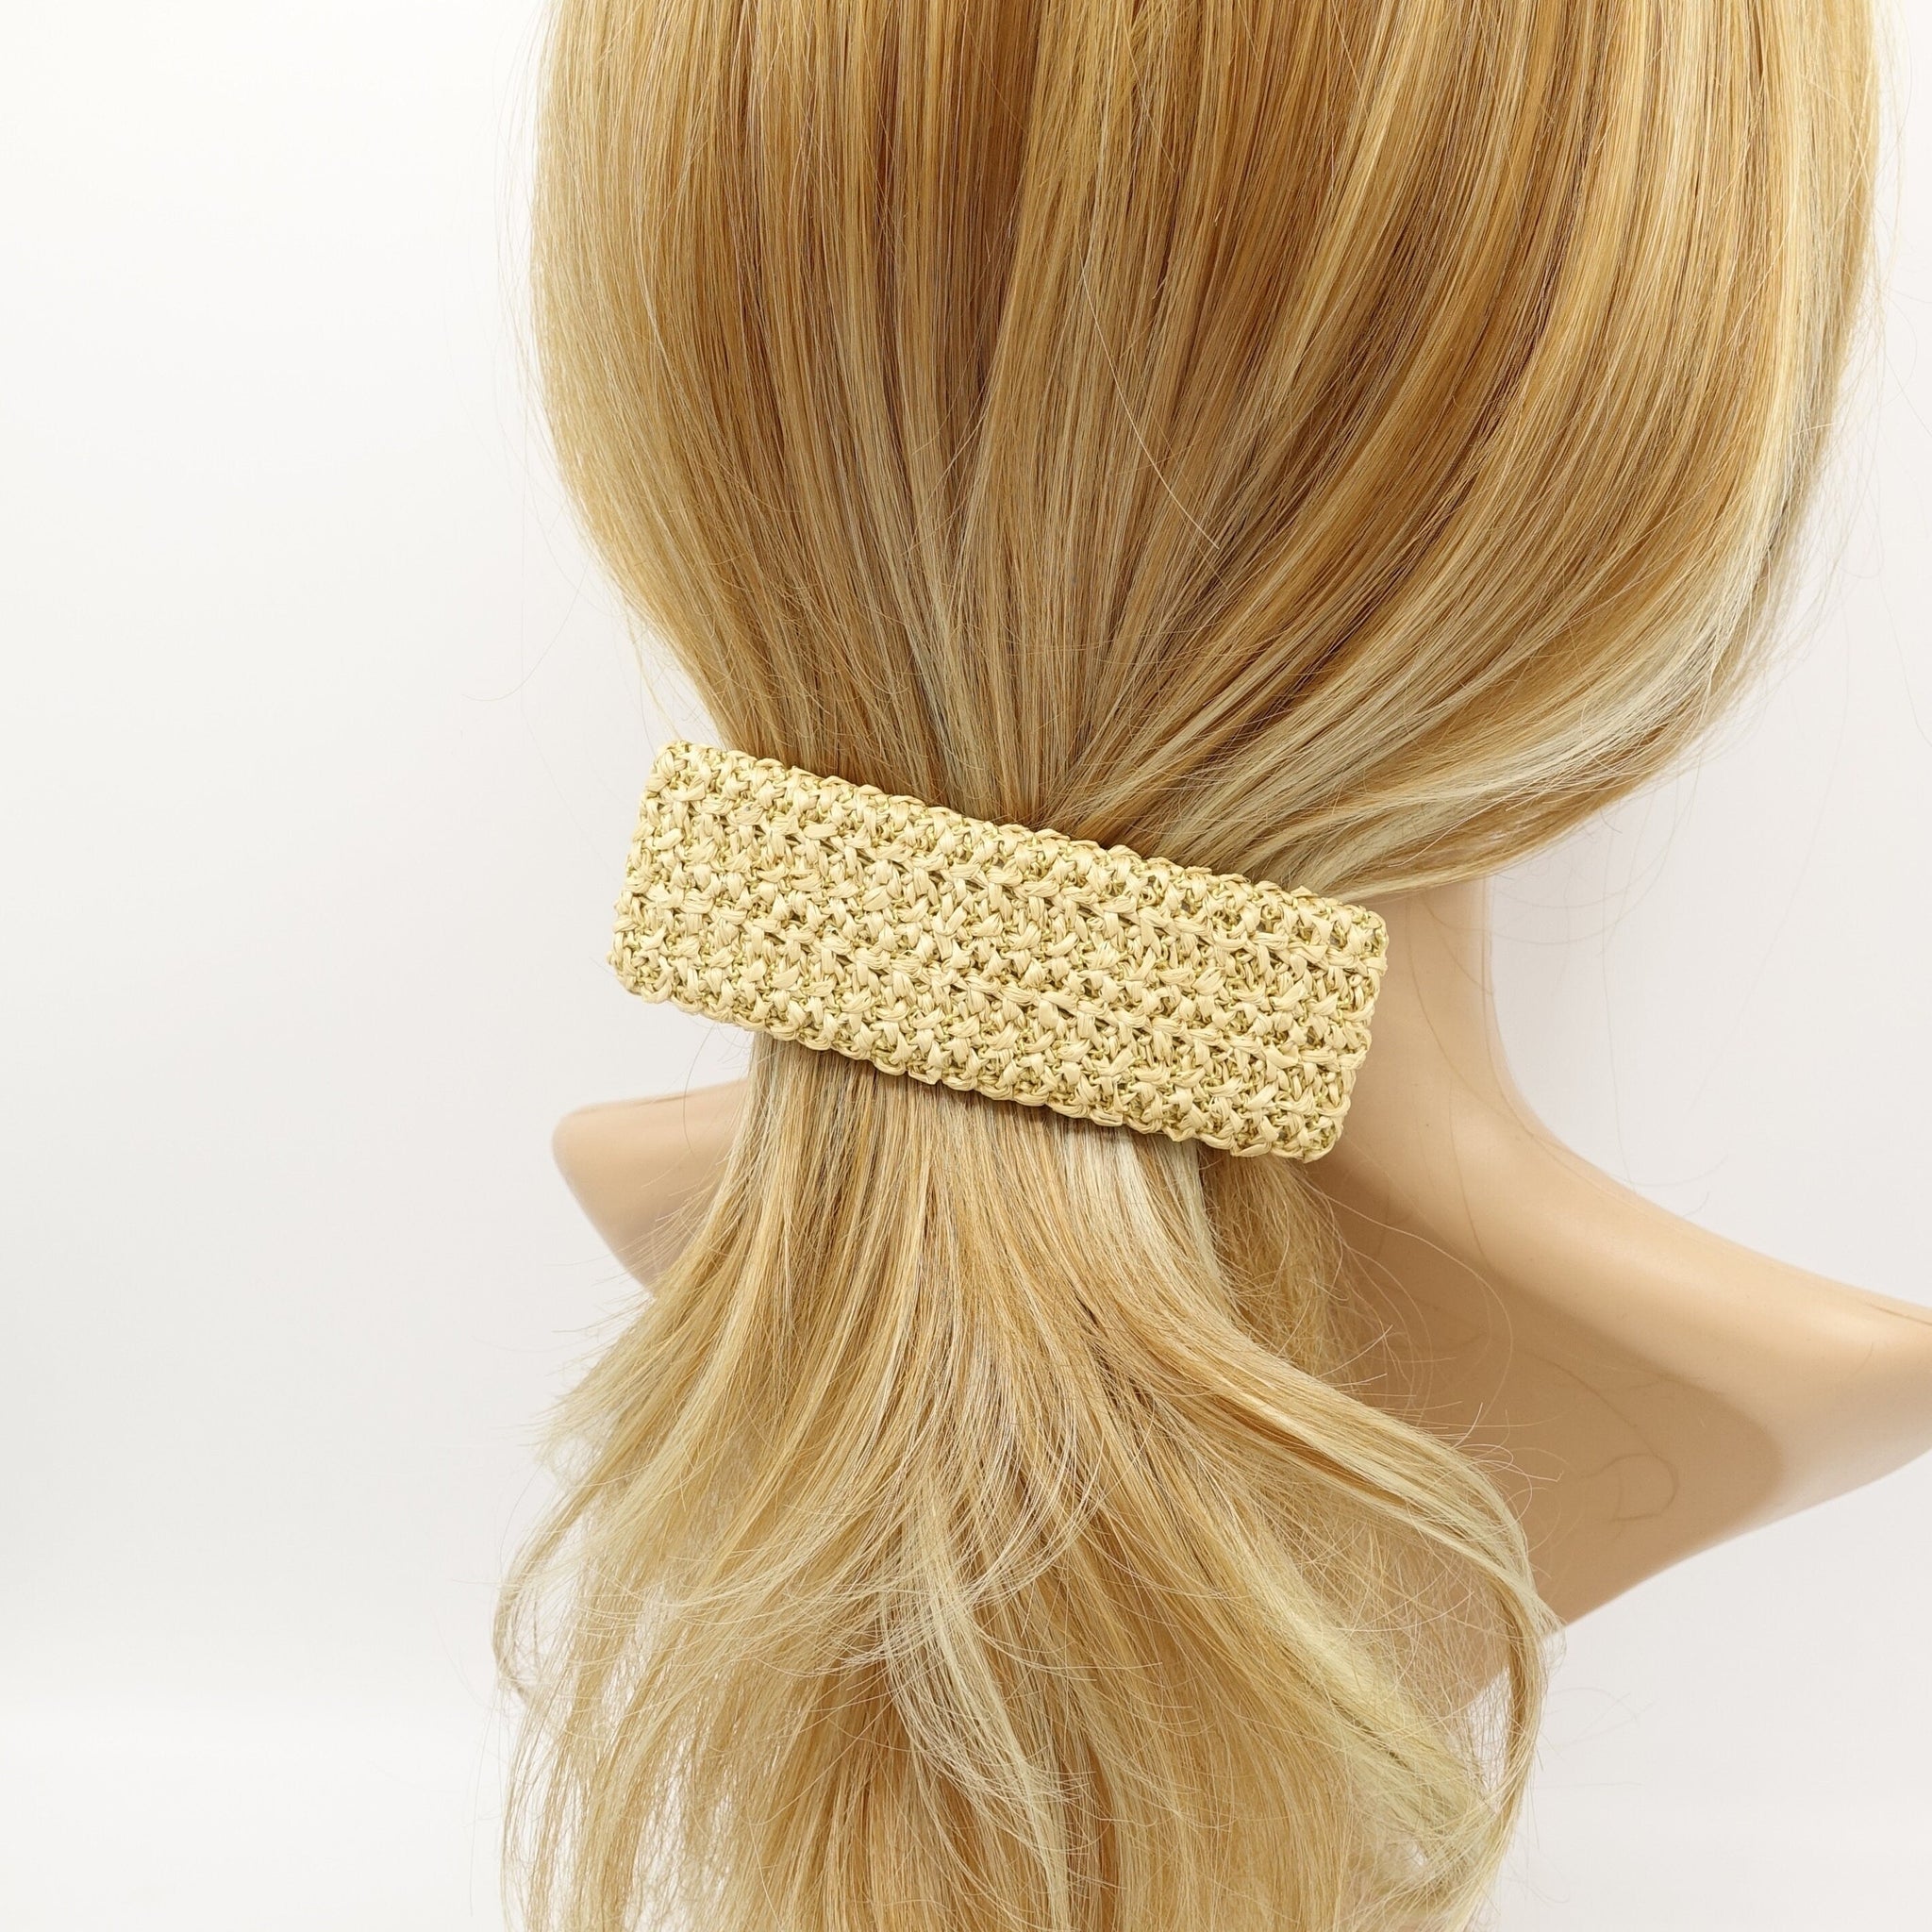 VeryShine claw/banana/barrette Beige faux straw threaded rectangle hair barrette natural hair accessory